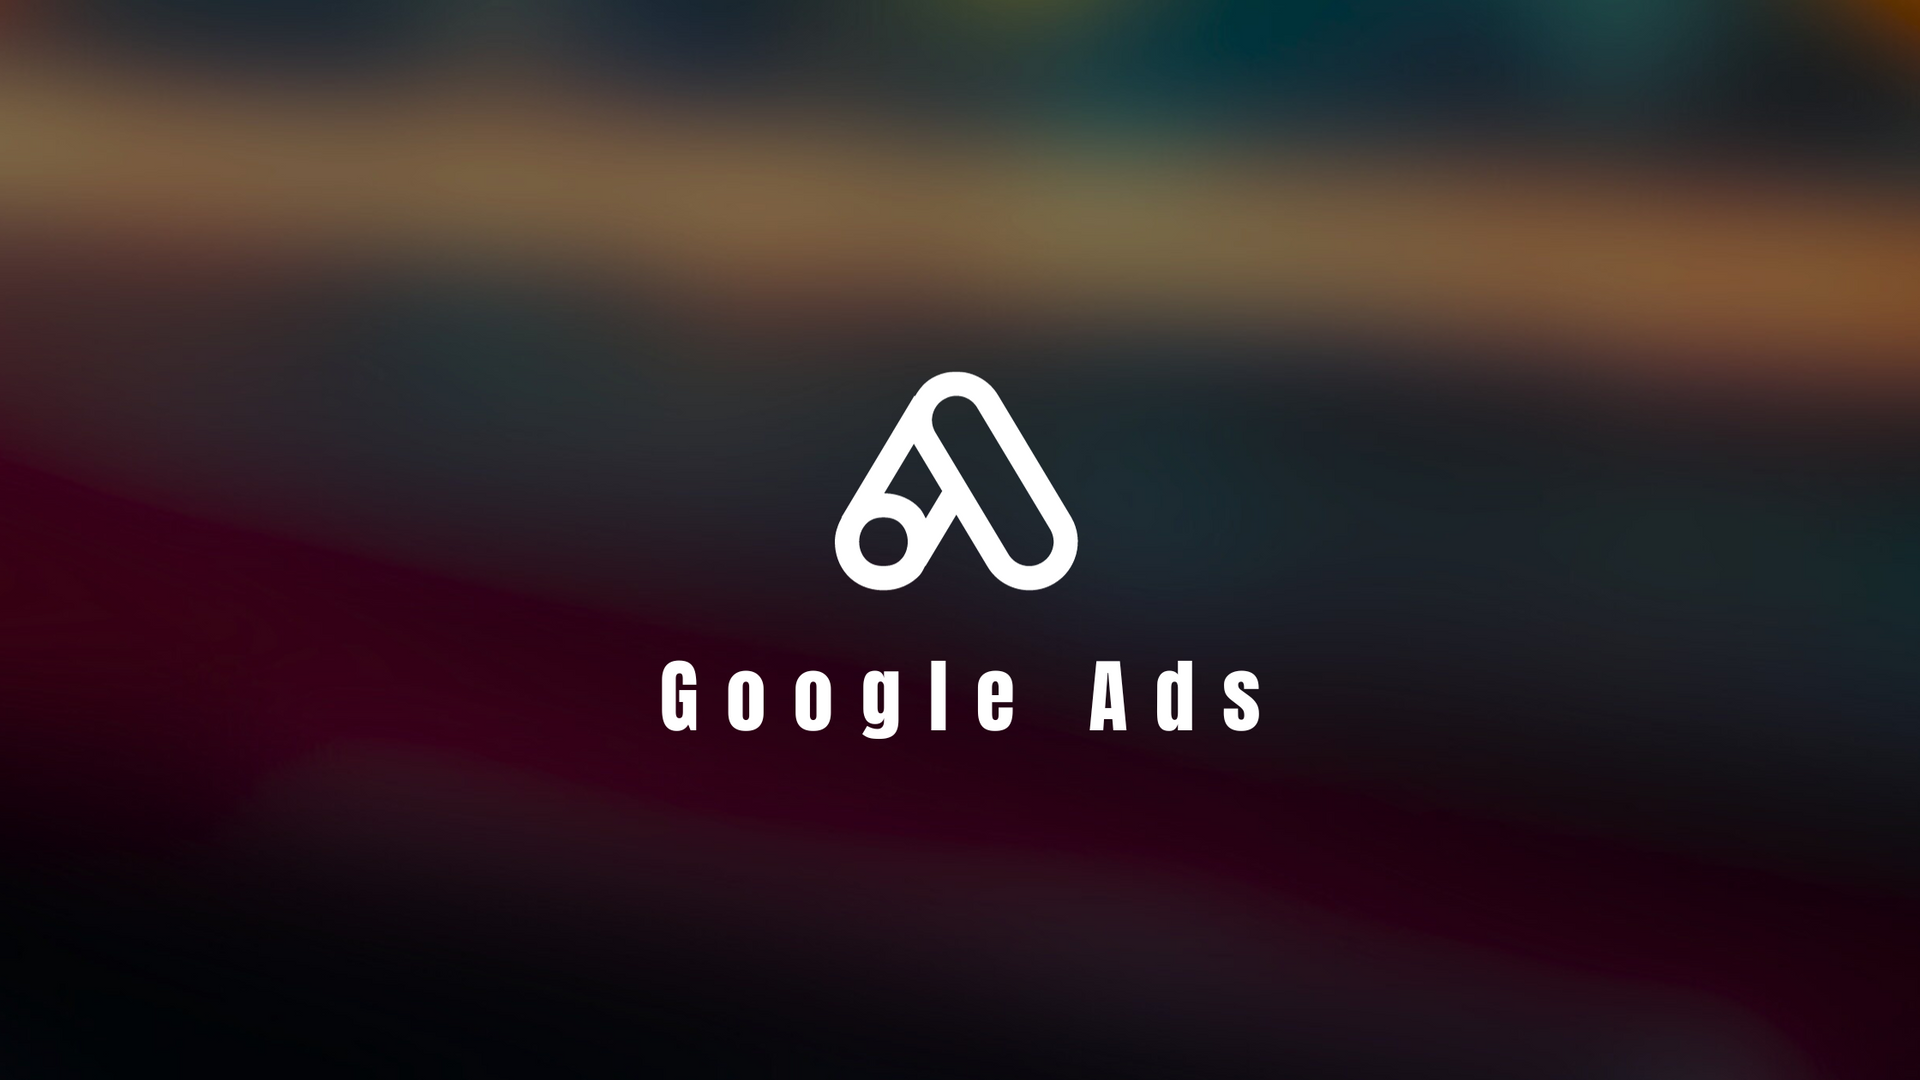 Bonus Tip - Step 5: Leverage Google Ads for Your Google My Business